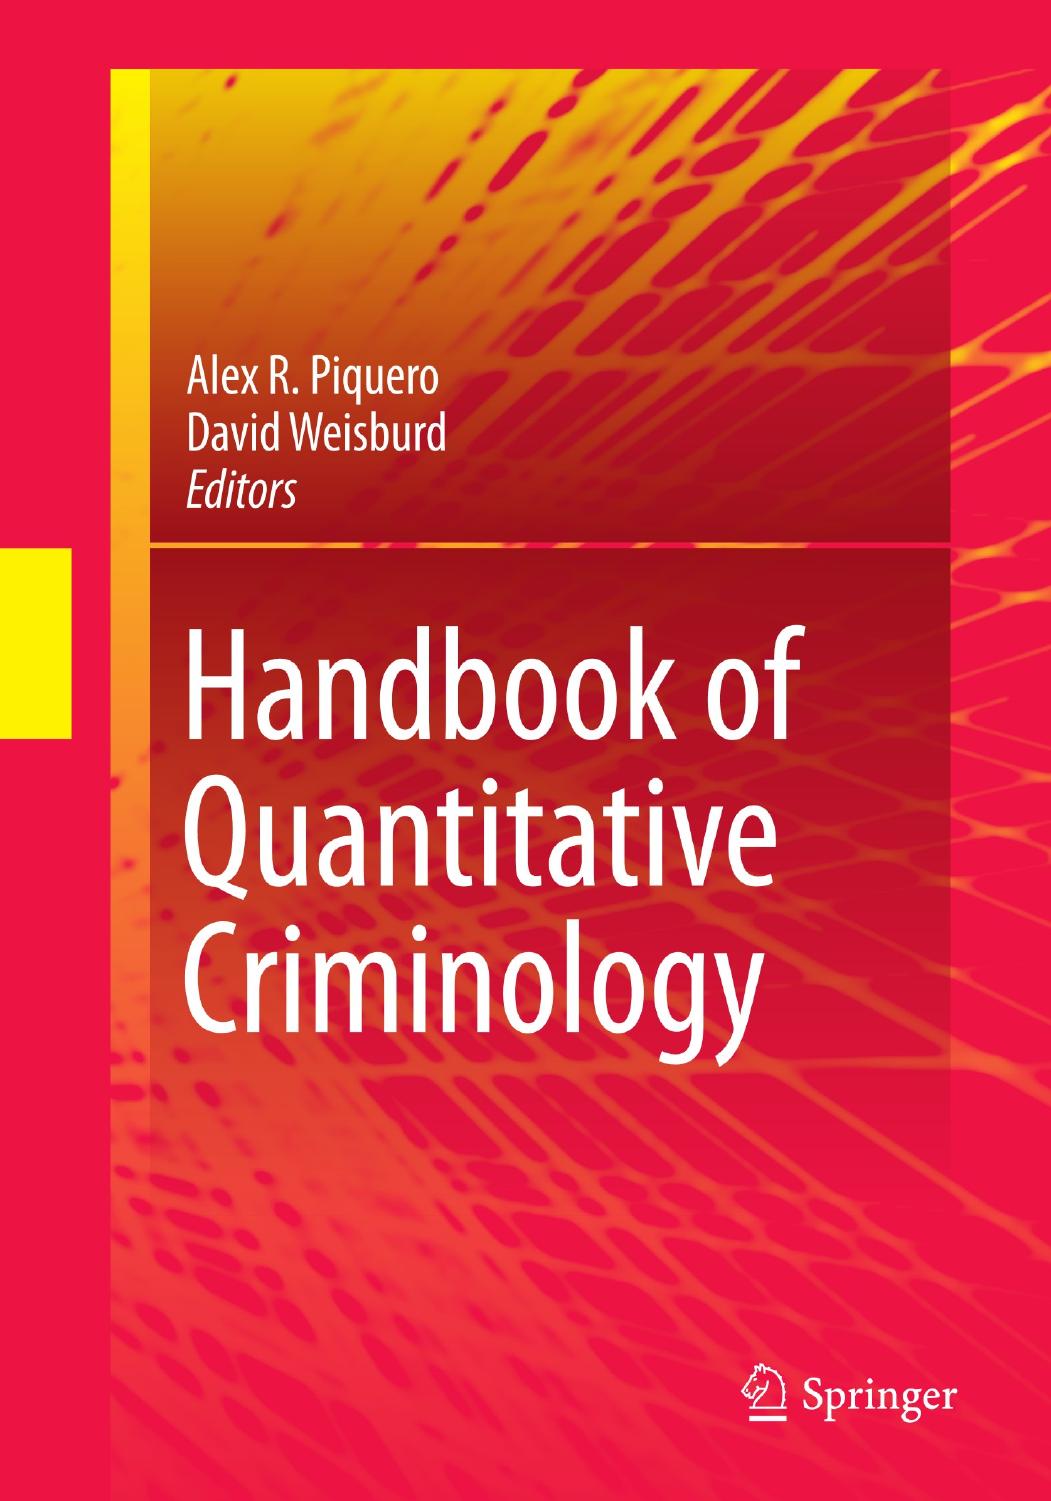 Handbook of Quantitative Criminology by Alex R. Piquero & David Weisburd